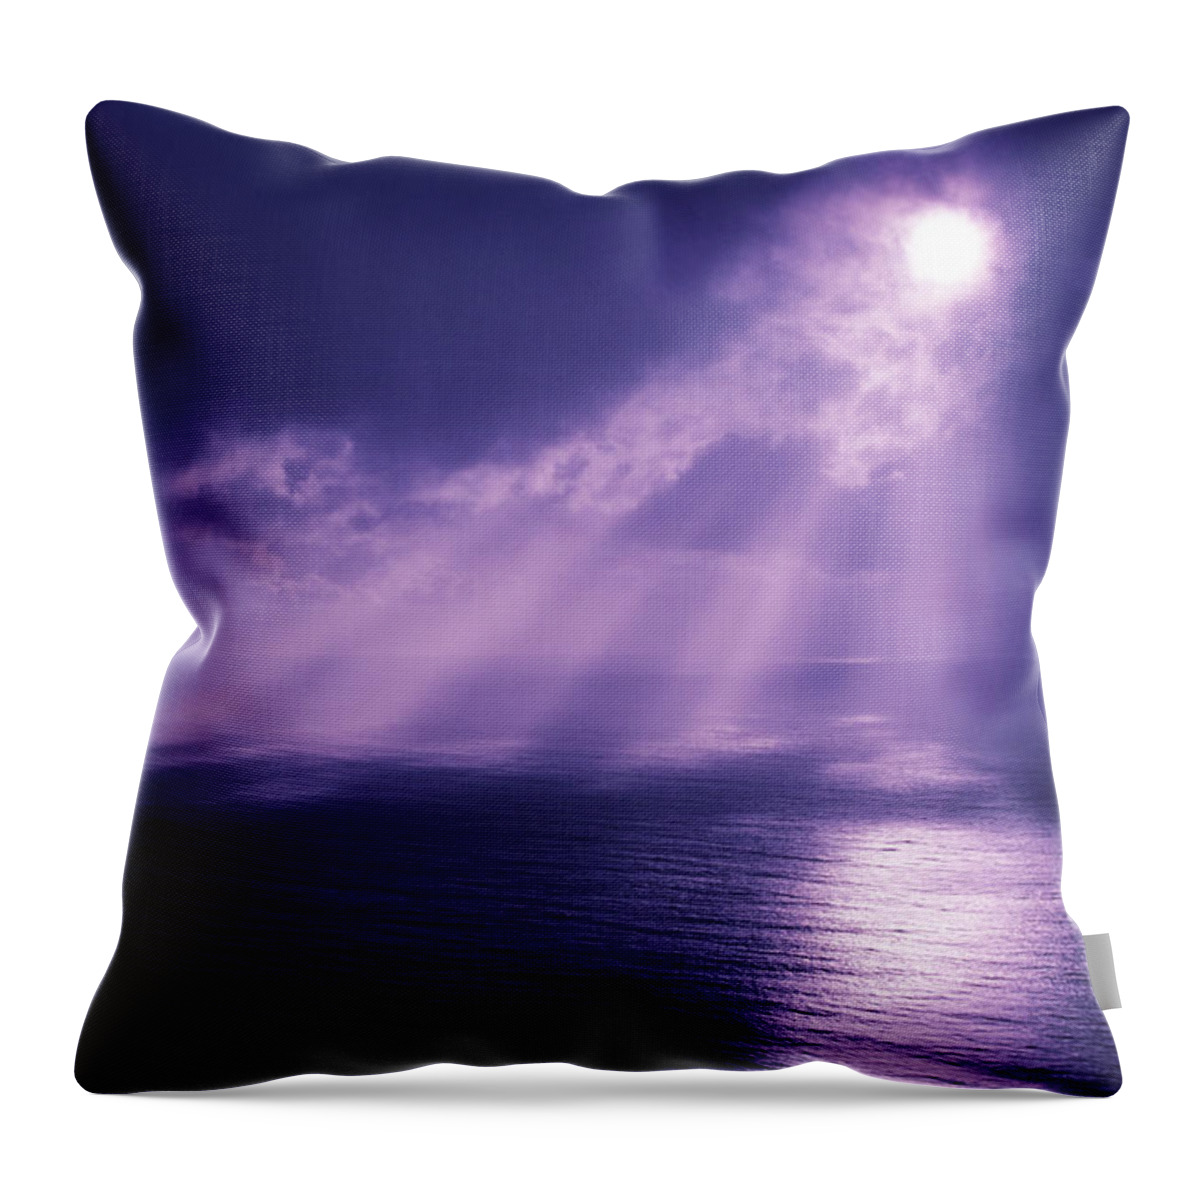 Blue Throw Pillow featuring the photograph Purple Cloudburst by Larry Dale Gordon - Printscapes